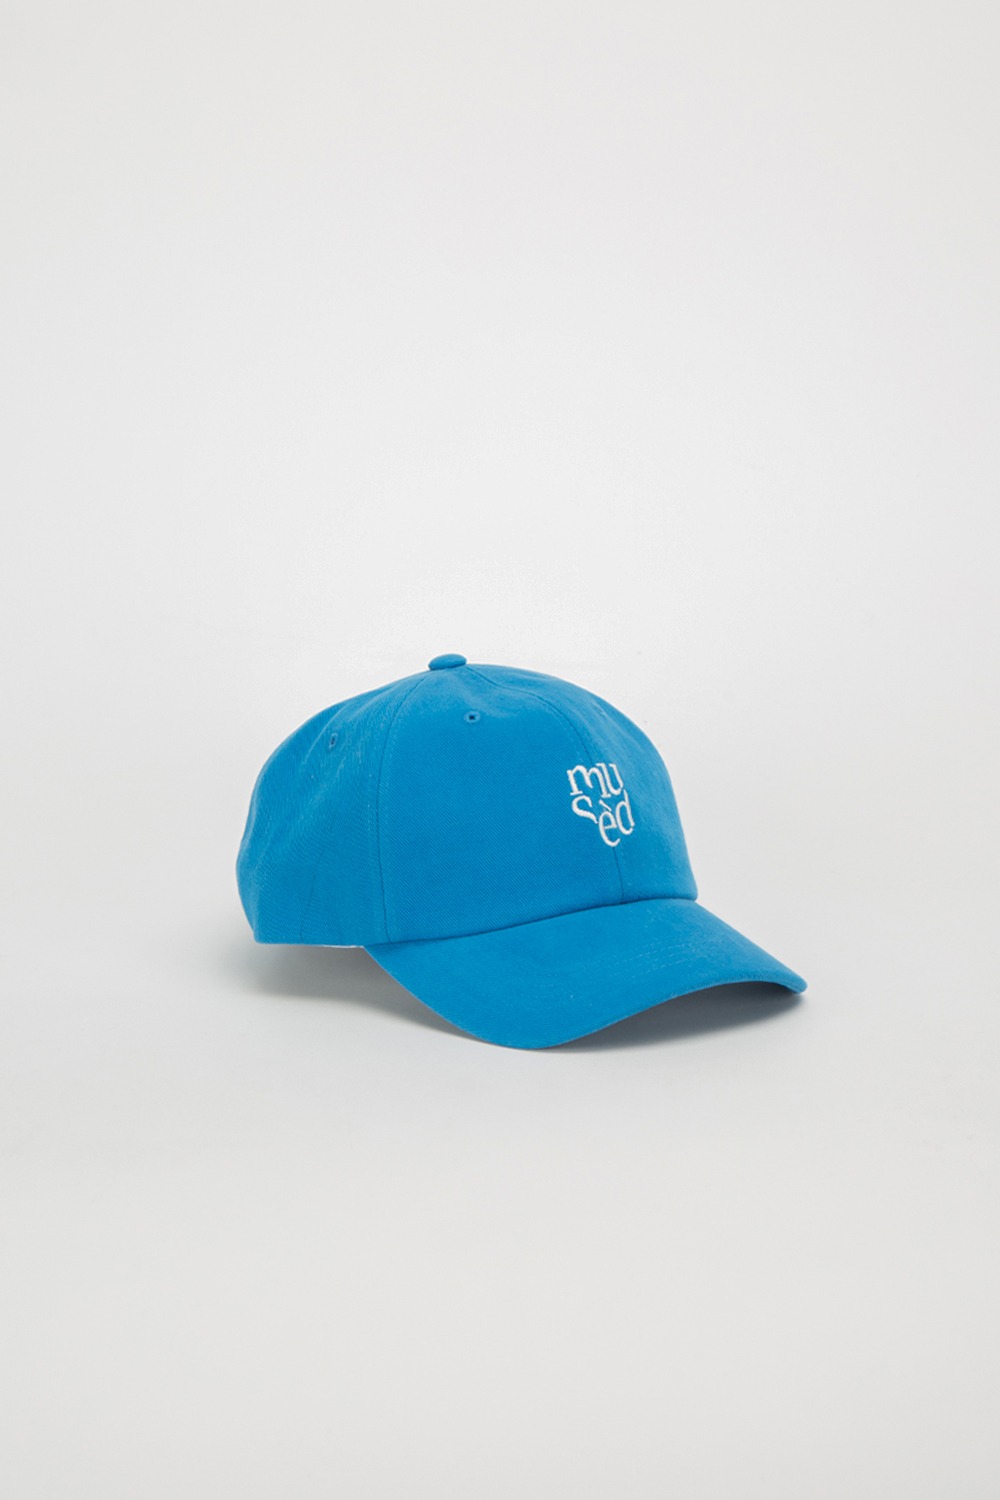 MUSED LOGO BALL CAP - BLUE